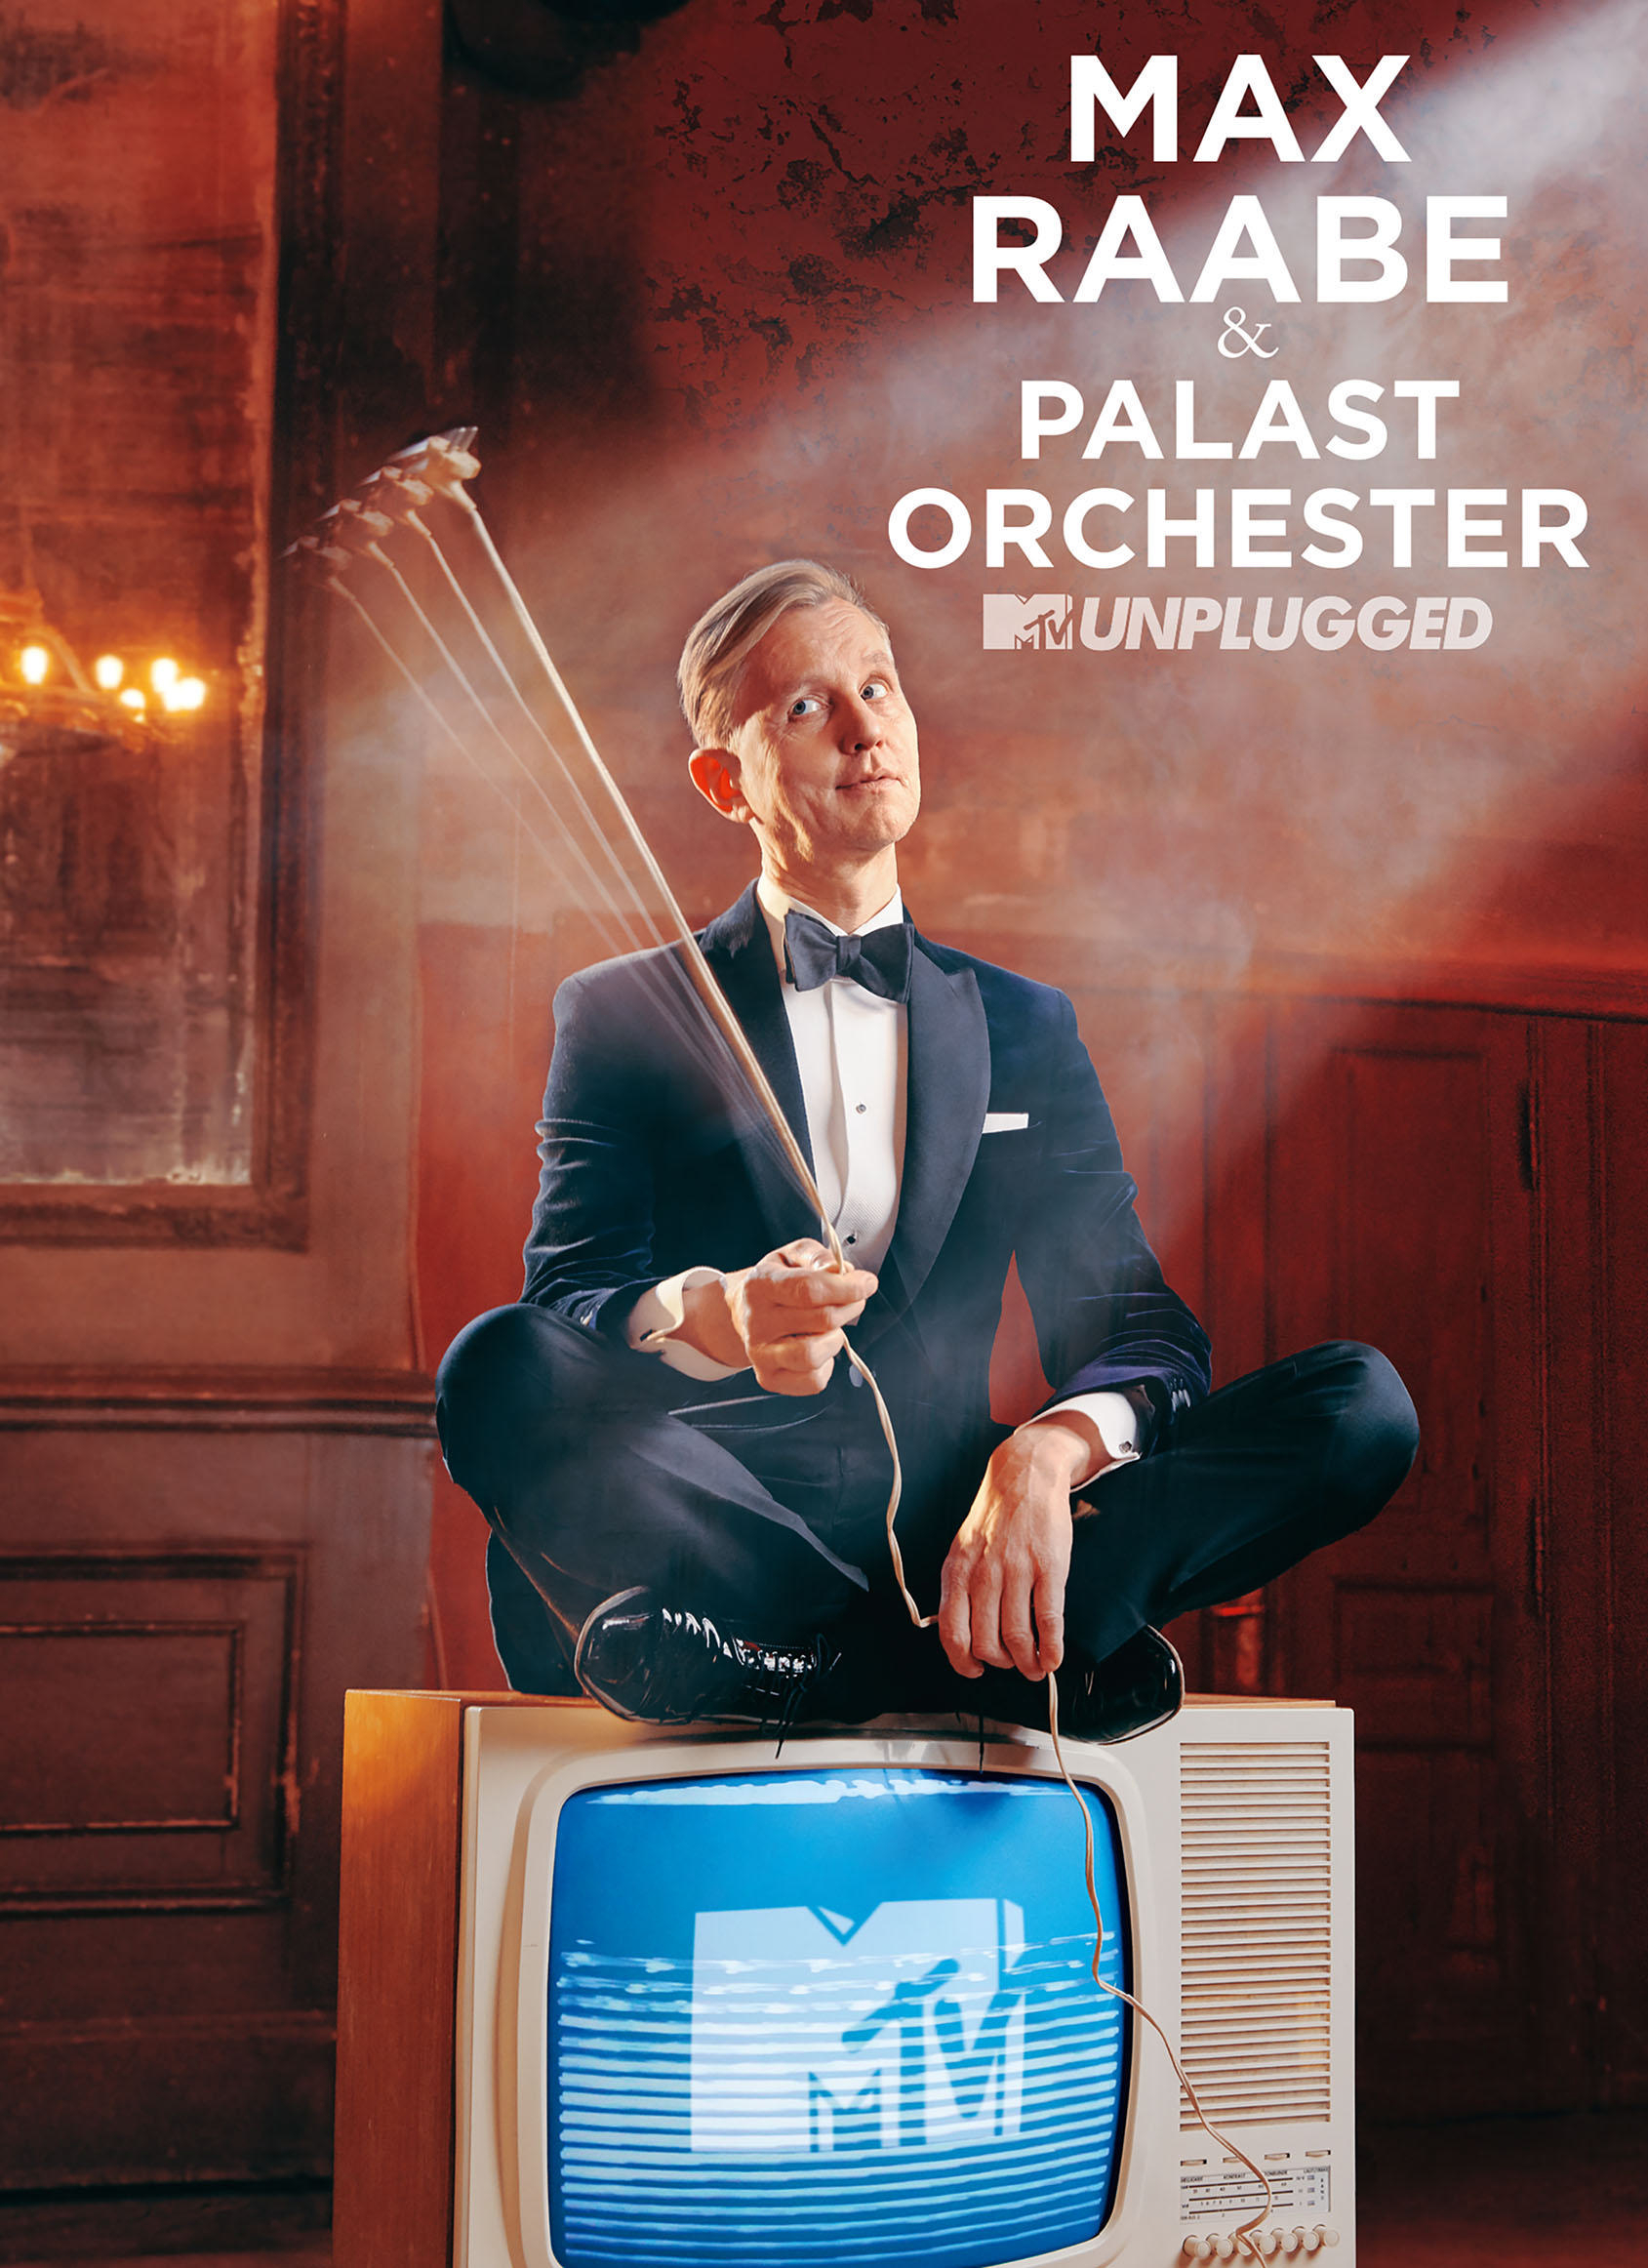 Palast Orchester & Max Unplugged - Raabe MTV (DVD) Max - Raabe